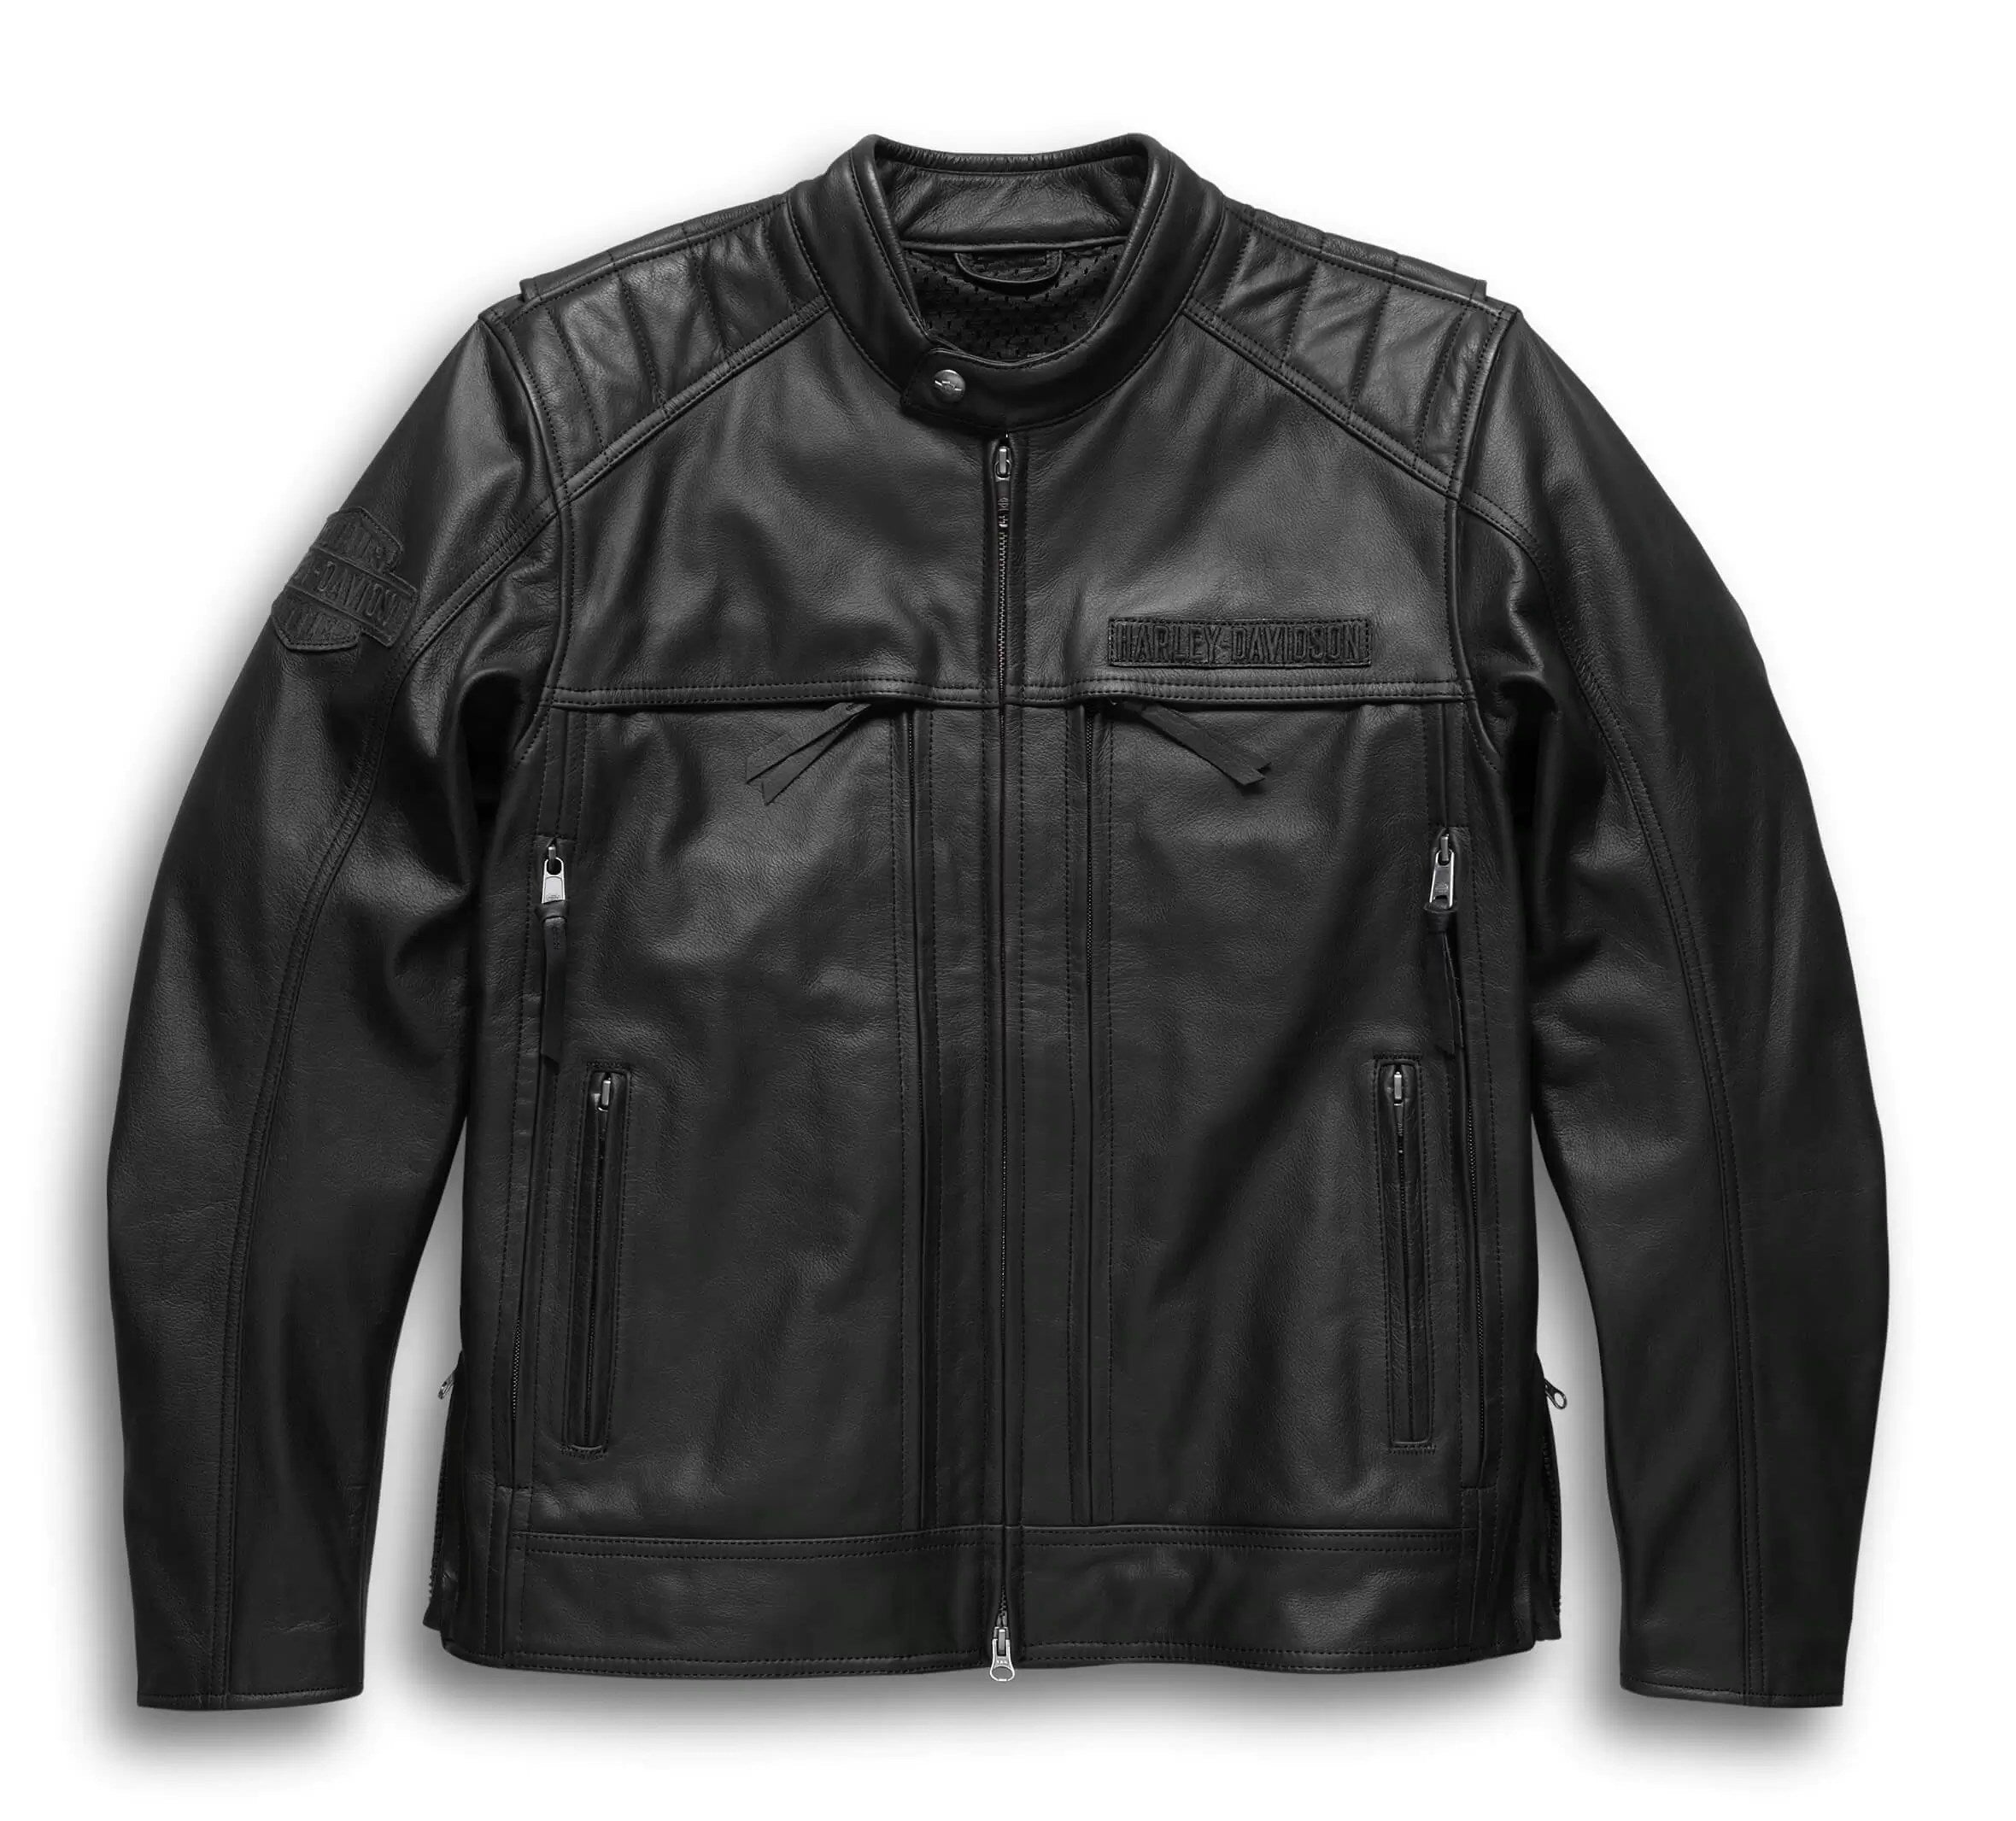 Harley Davidson Motorcycle Leather Jacket in Black